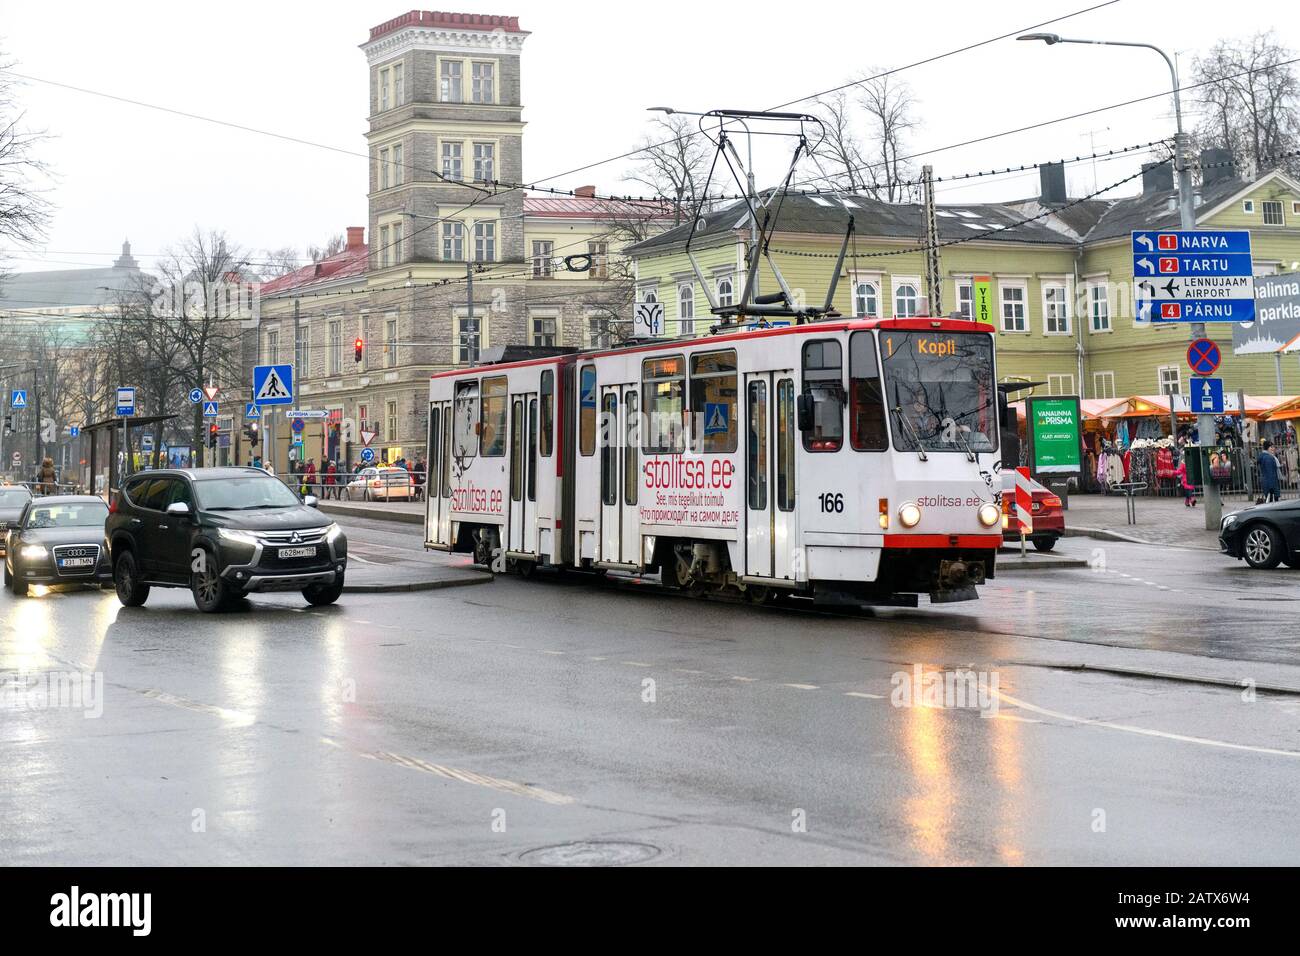 Tram in Tallinn, alongside Viru Turg (Viru Market). Tallinn, Estonia Stock Photo